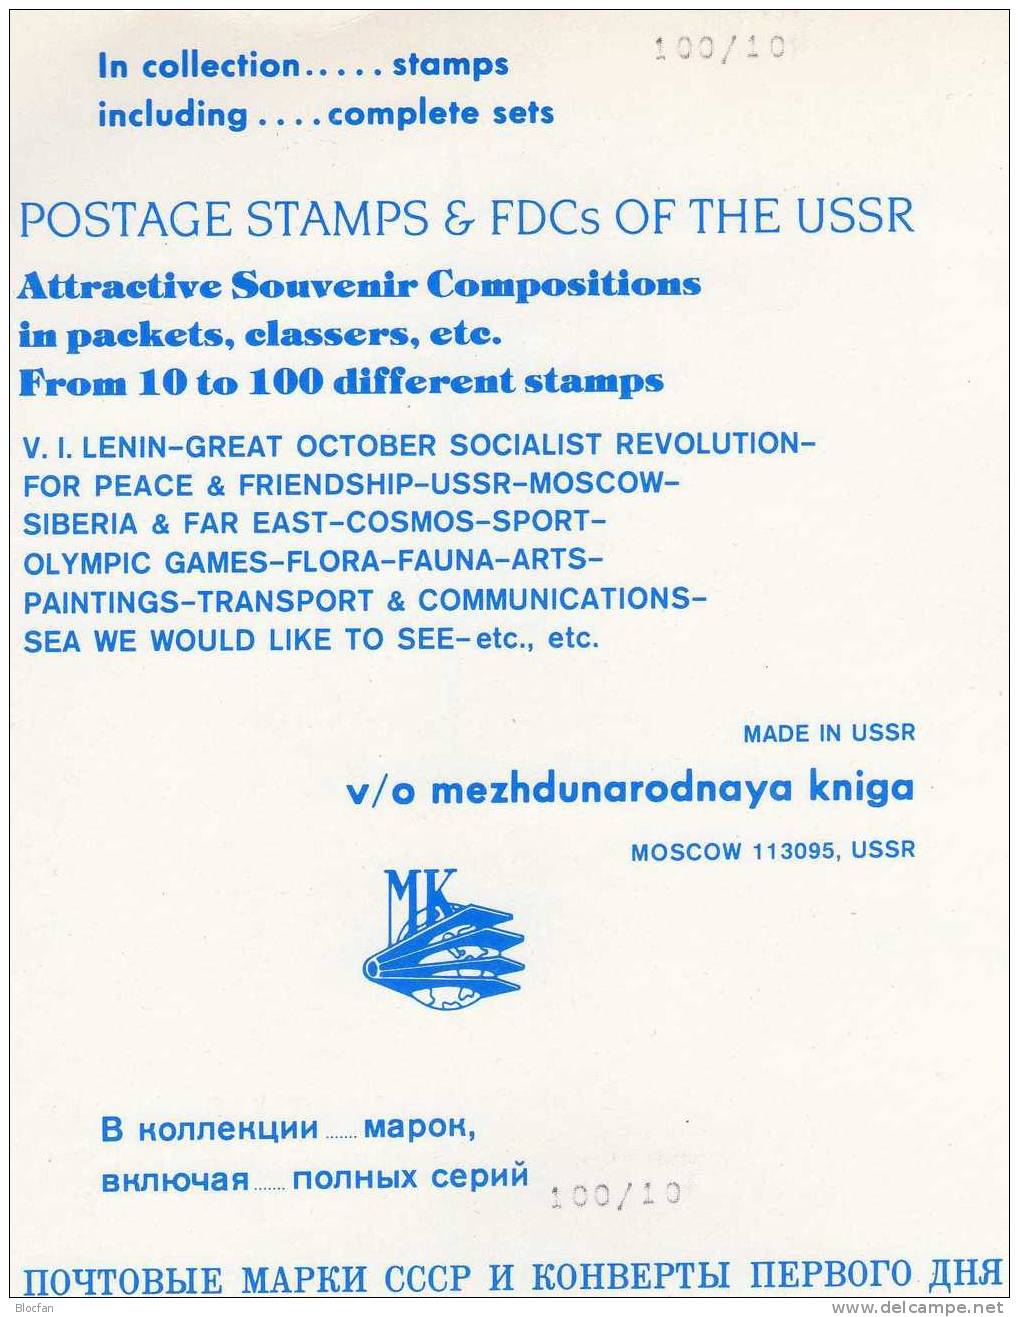 Raumfahrt Erde Satellit Kosmos Tag der Kosmonautik Sowjetunion Heft 1/90 o 50€ Raumschiff space set from USSR CCCP SU